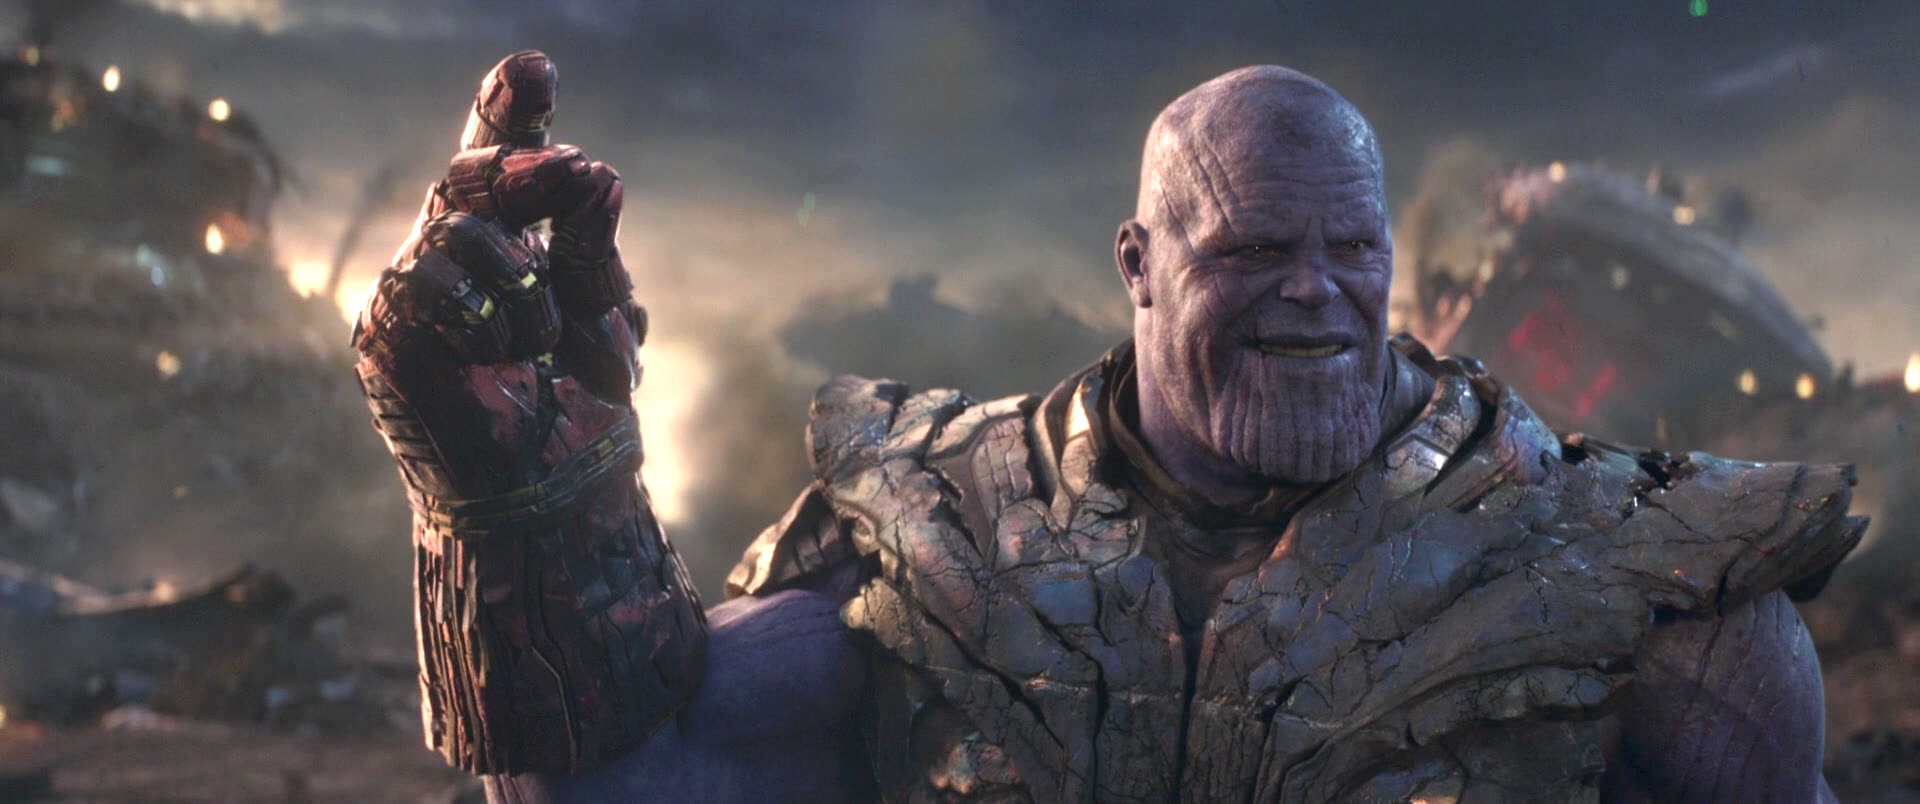 Thanos raises his hand to snap in Avengers: Endgame